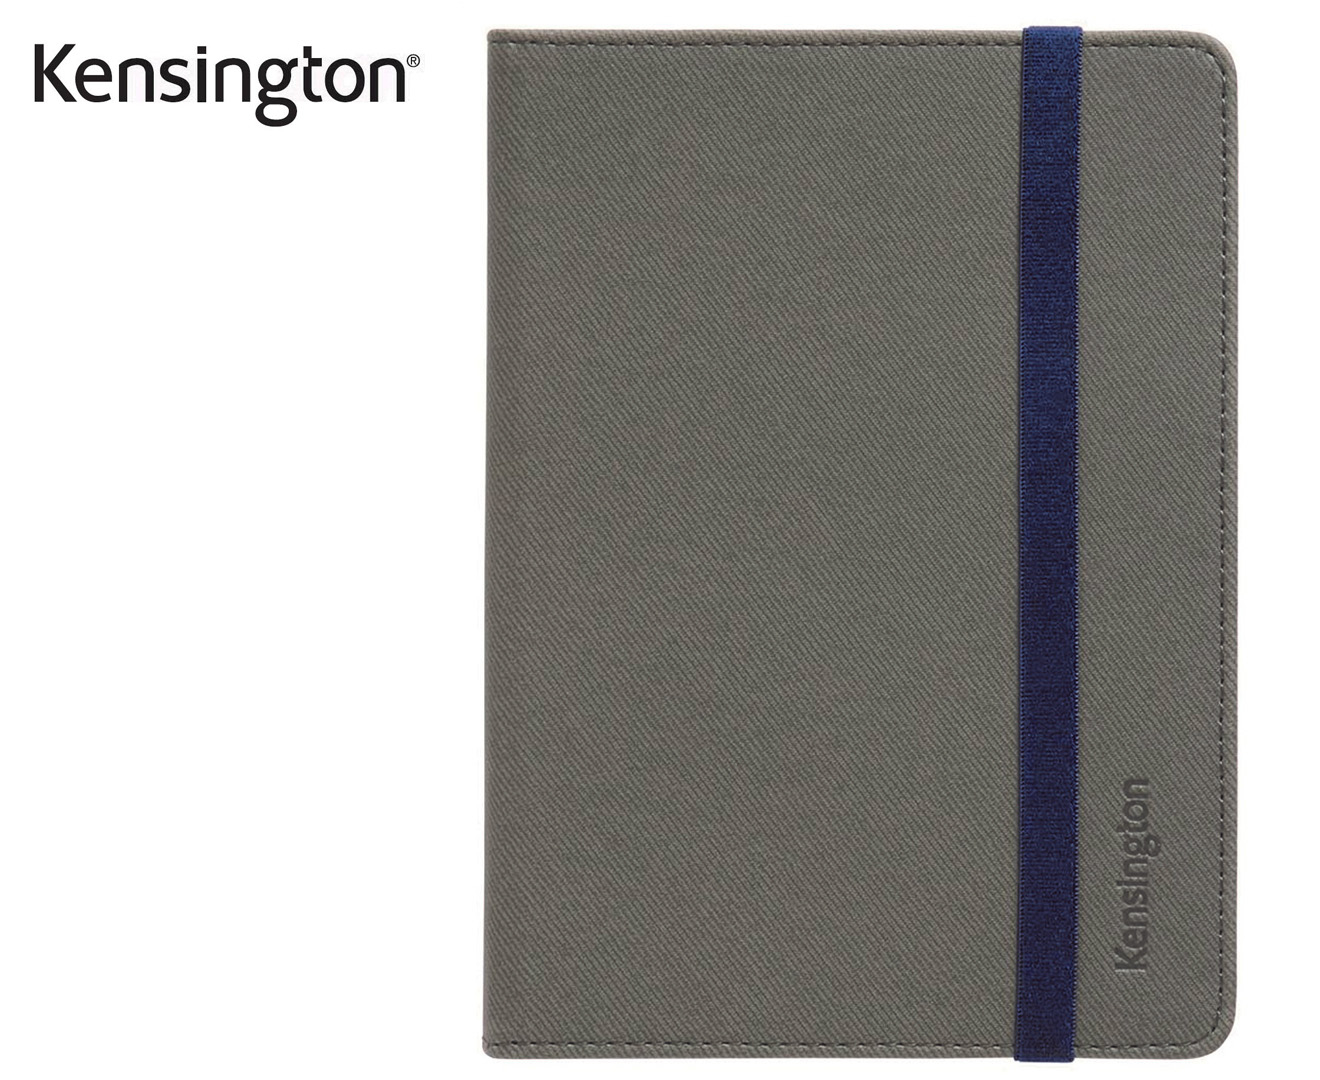 Kensington Folio Case for Kindle - Grey/Navy